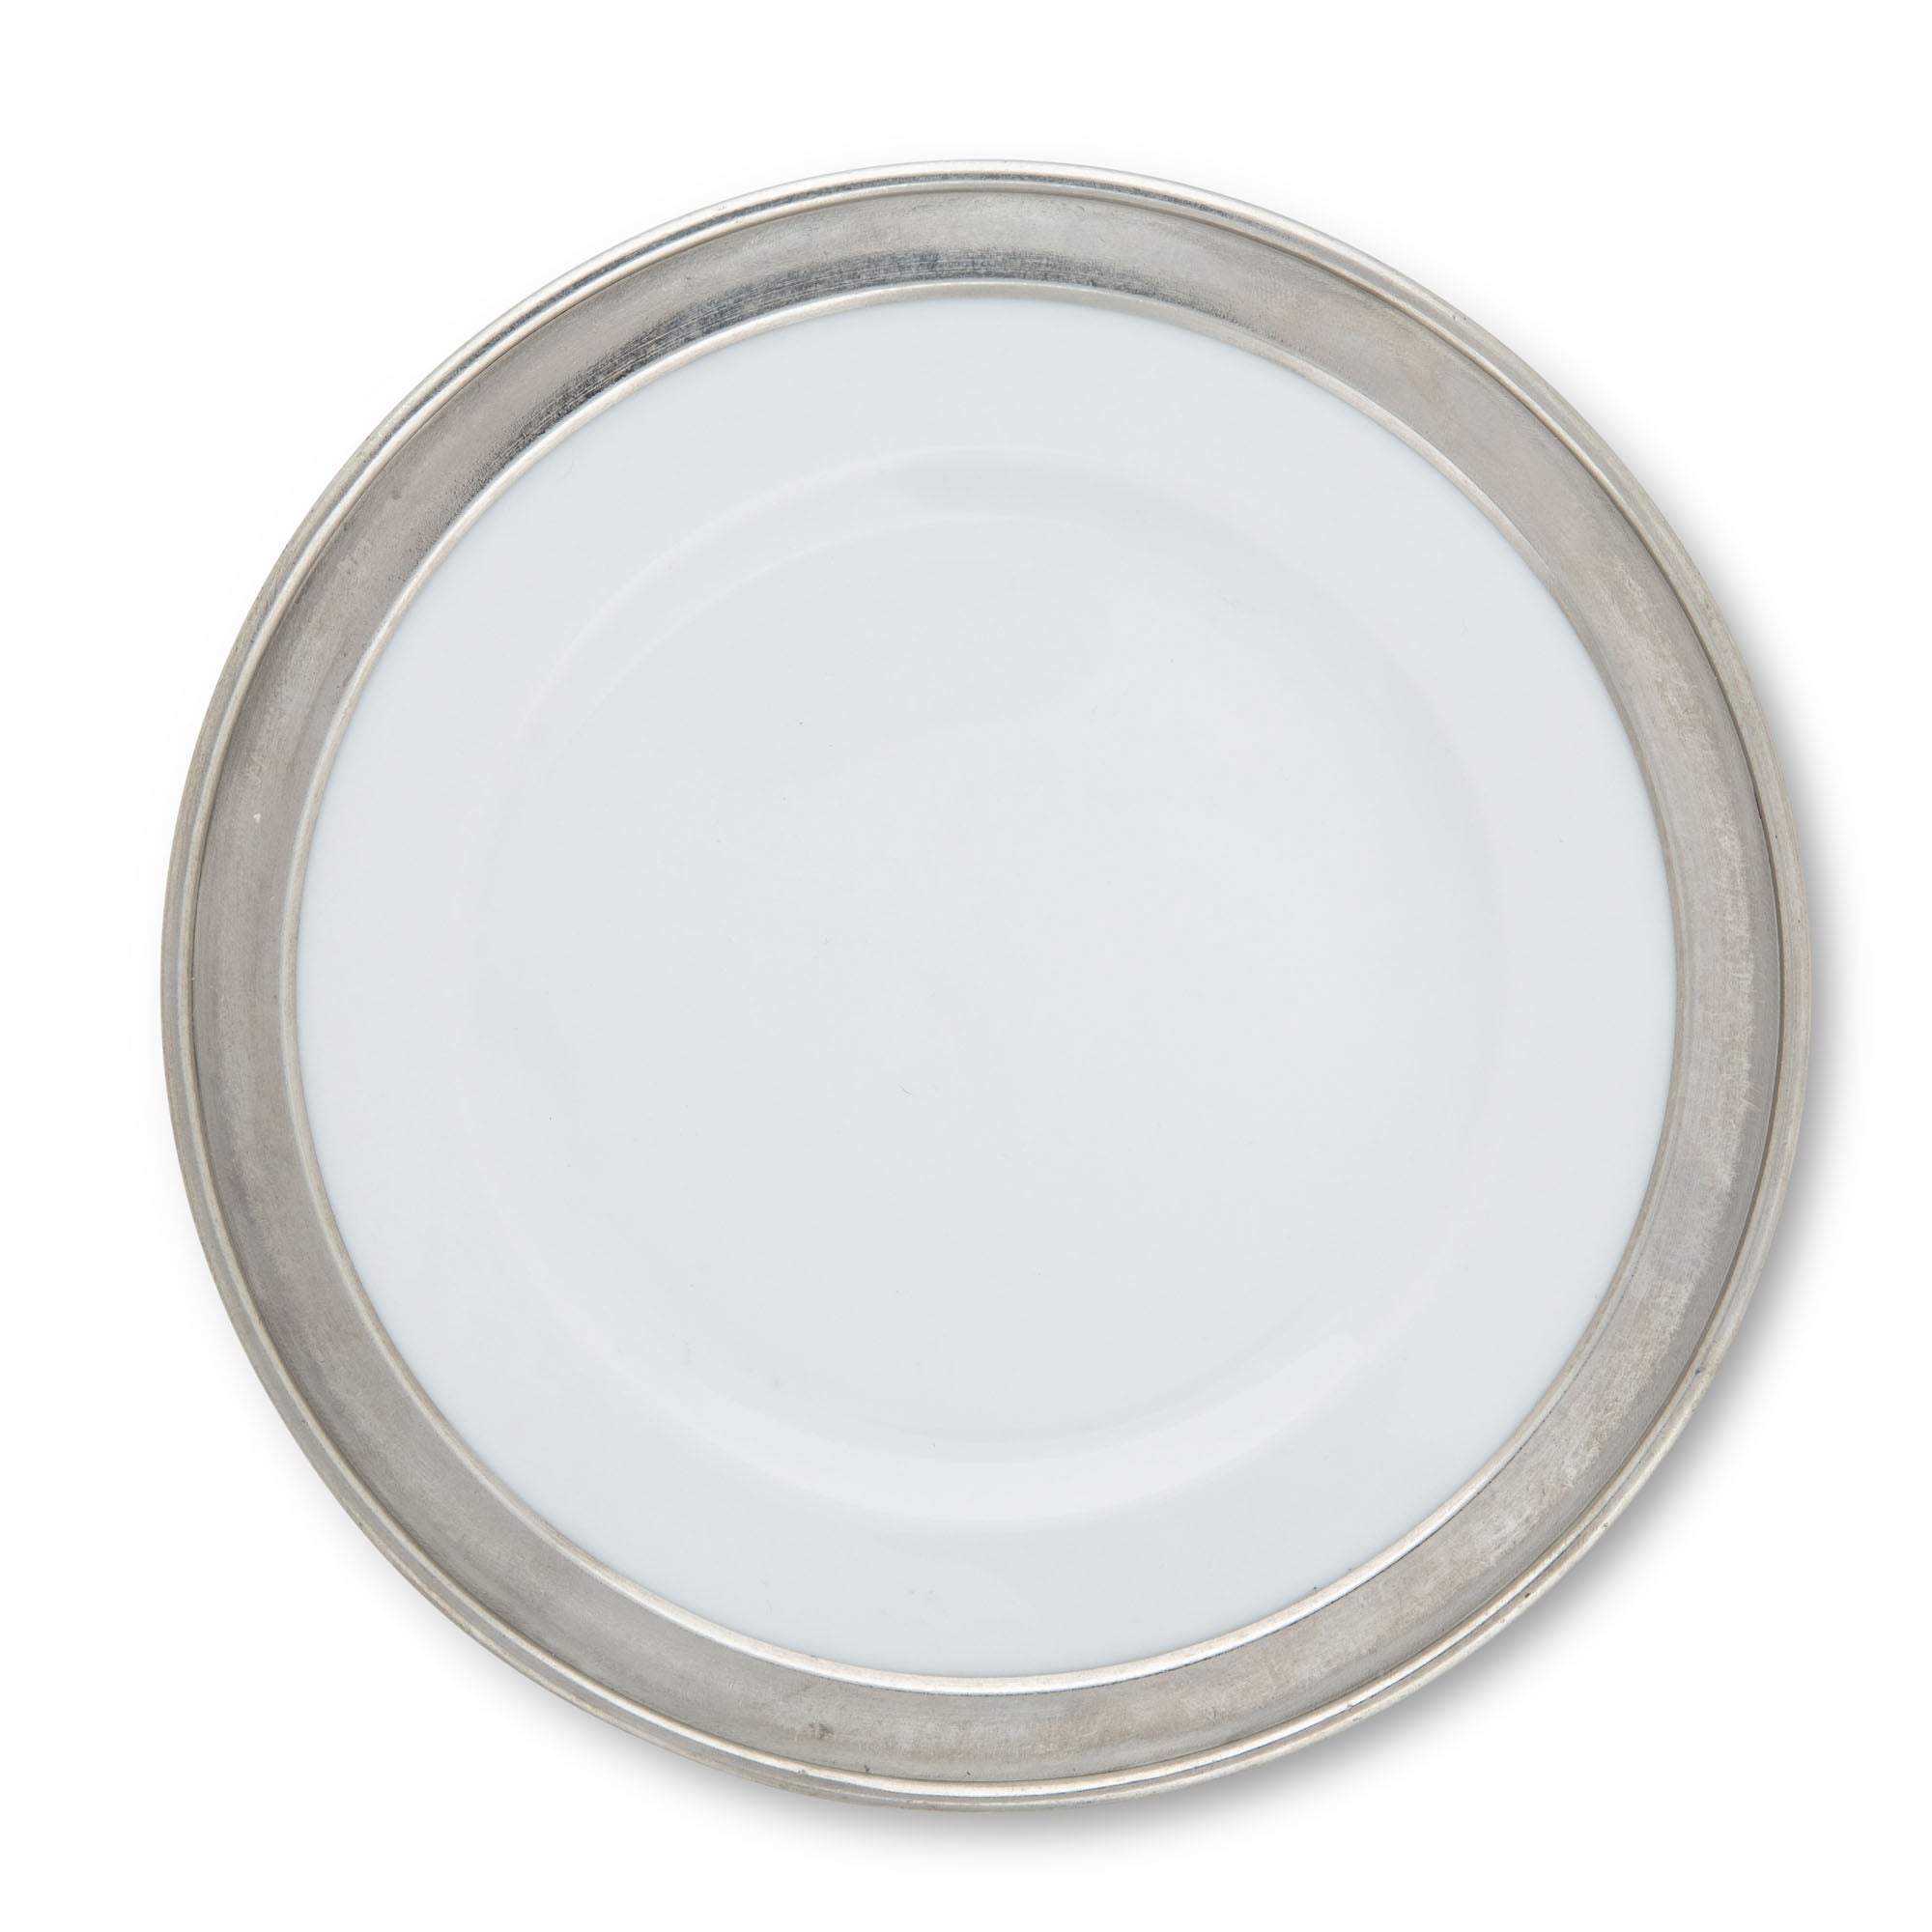 Vagabond House Classic Pewter Rim Salad Plate Product Image